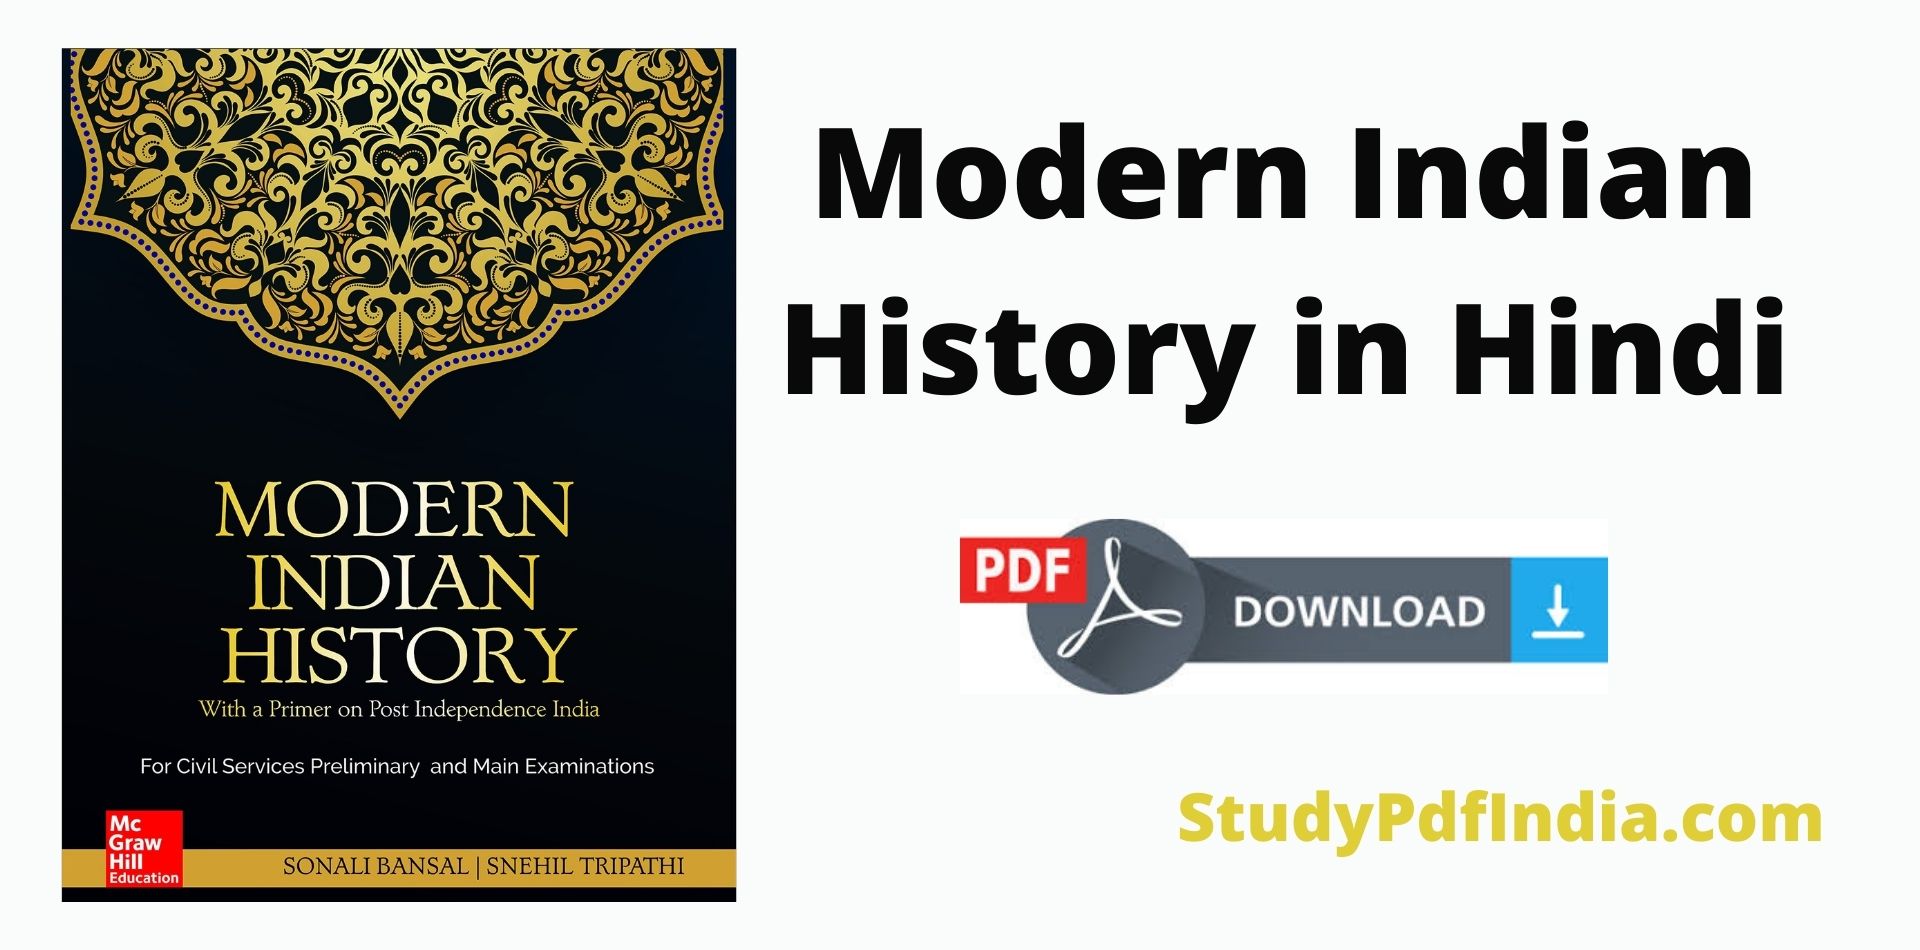 Modern India History PDF Download in Hindi